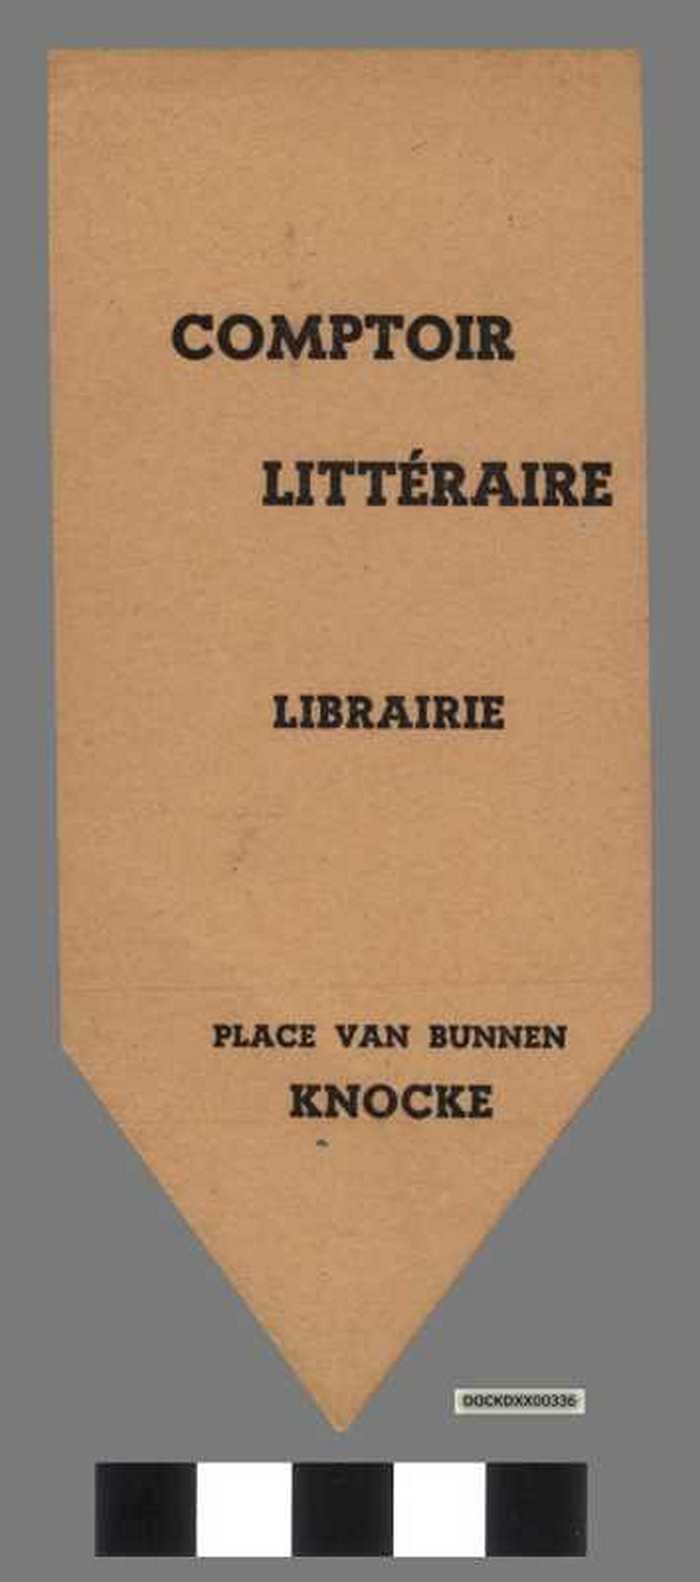 Bladwijzer: Comptoir Littéraire, librairie, Knocke.